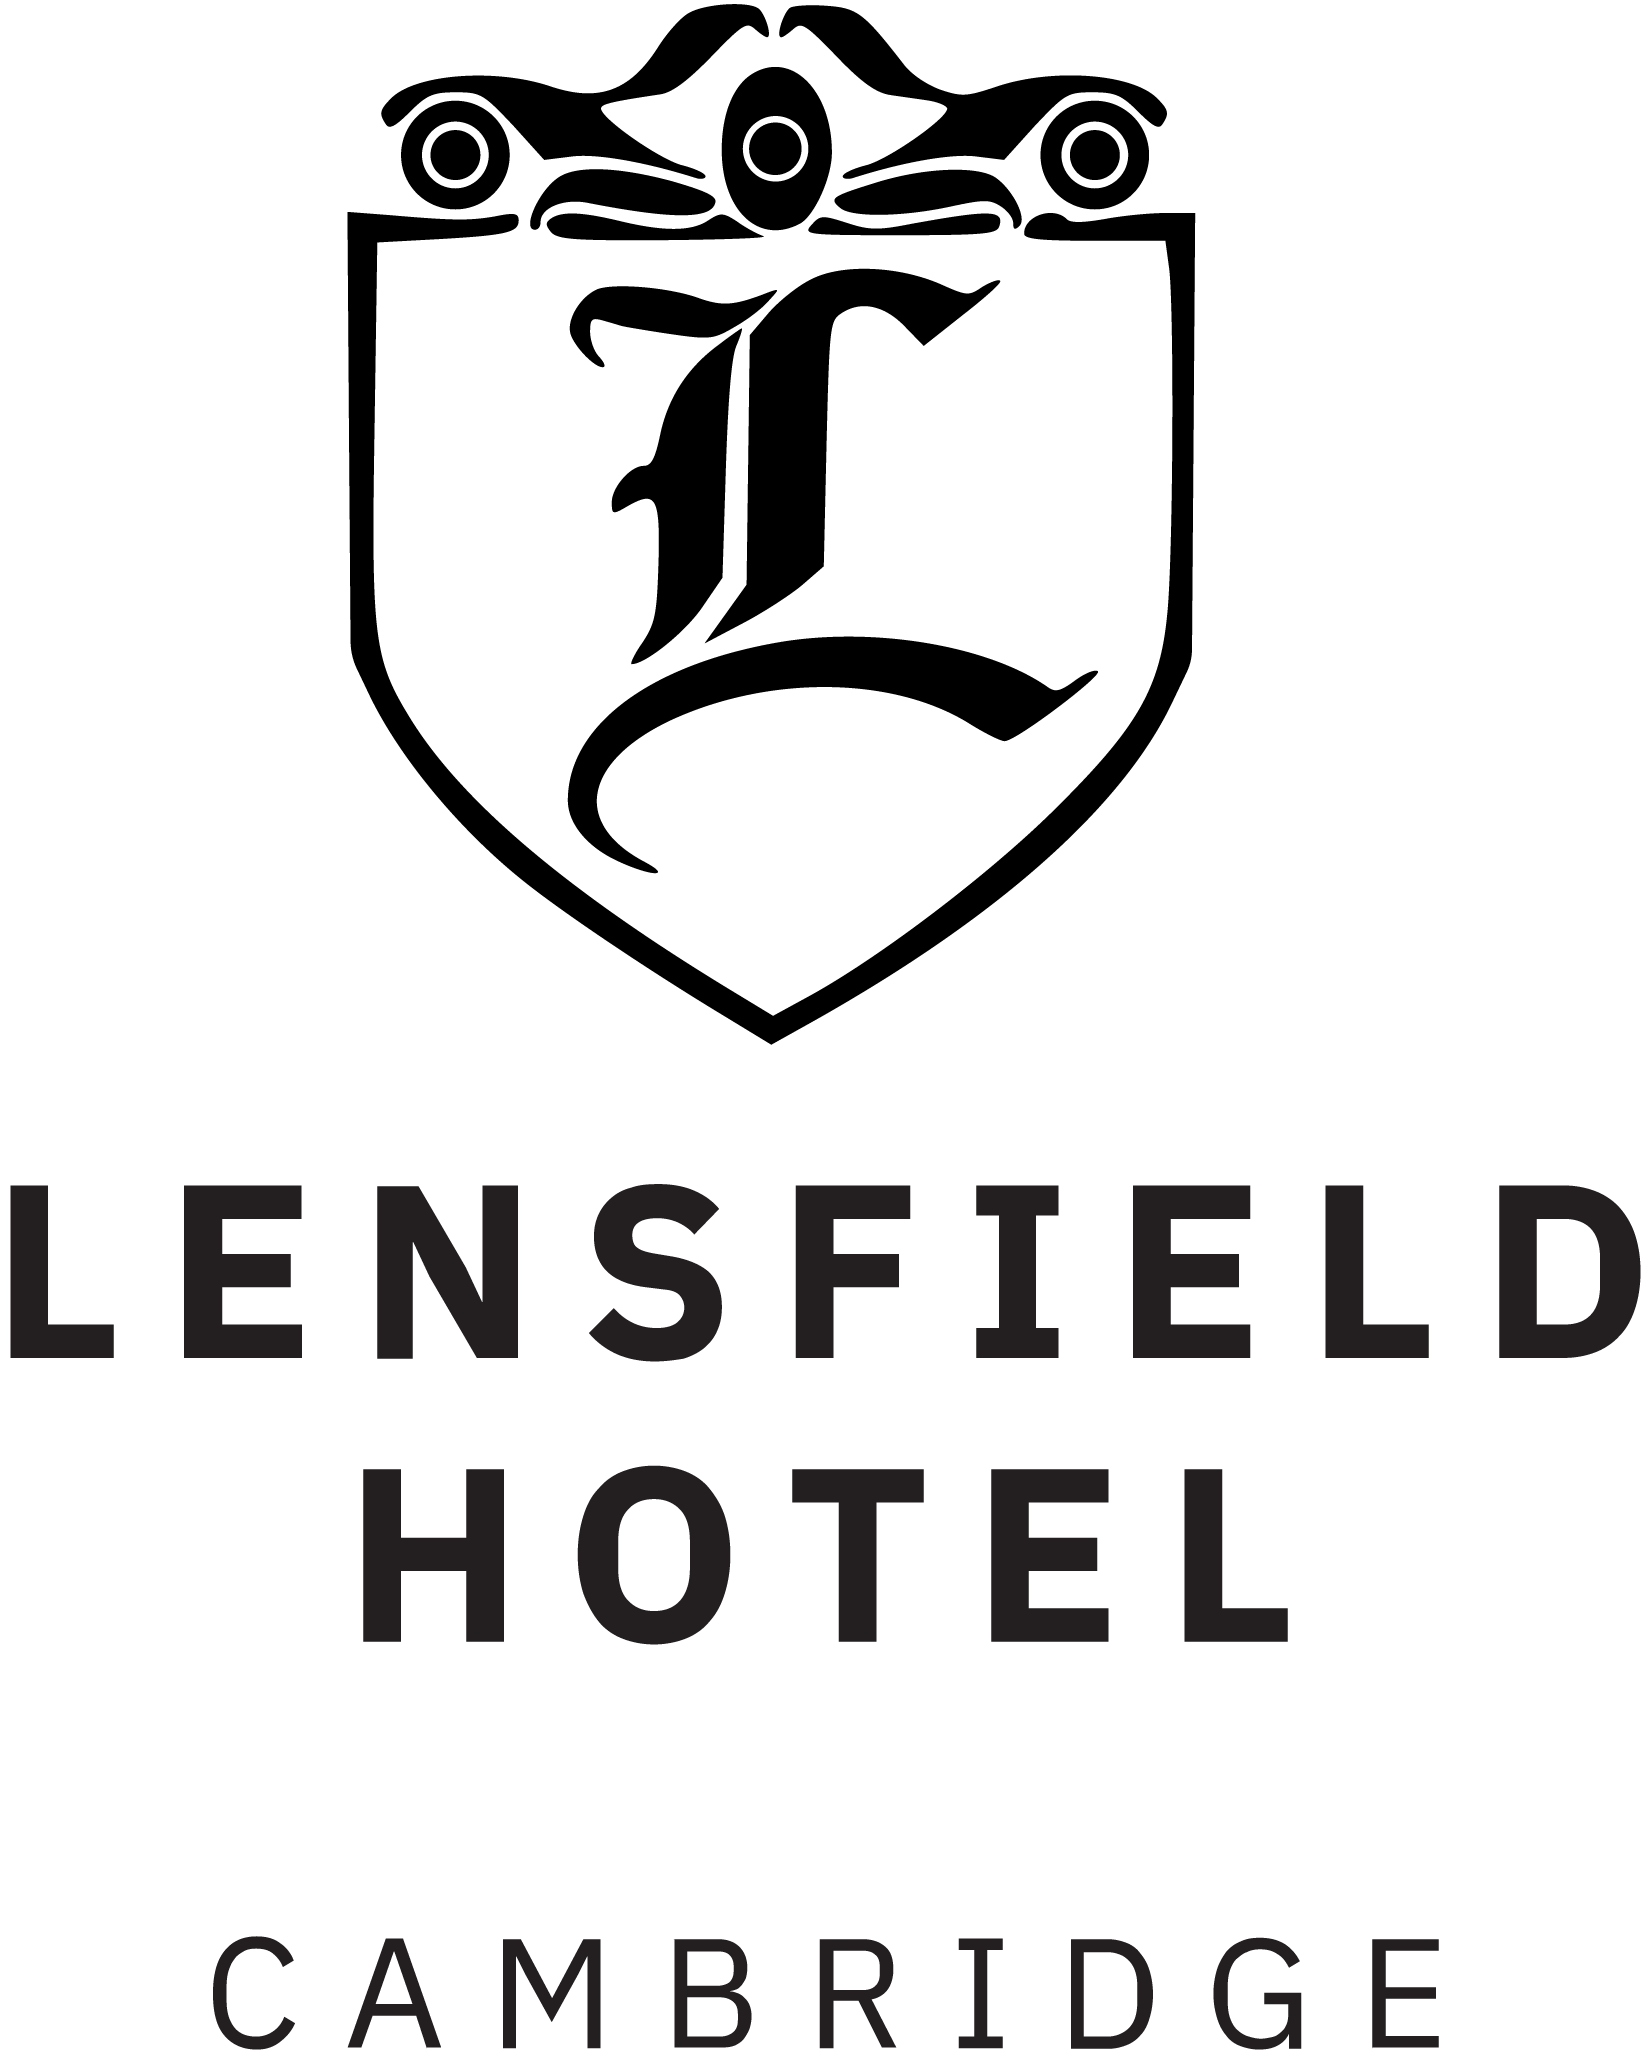 Lensfield hotel logo